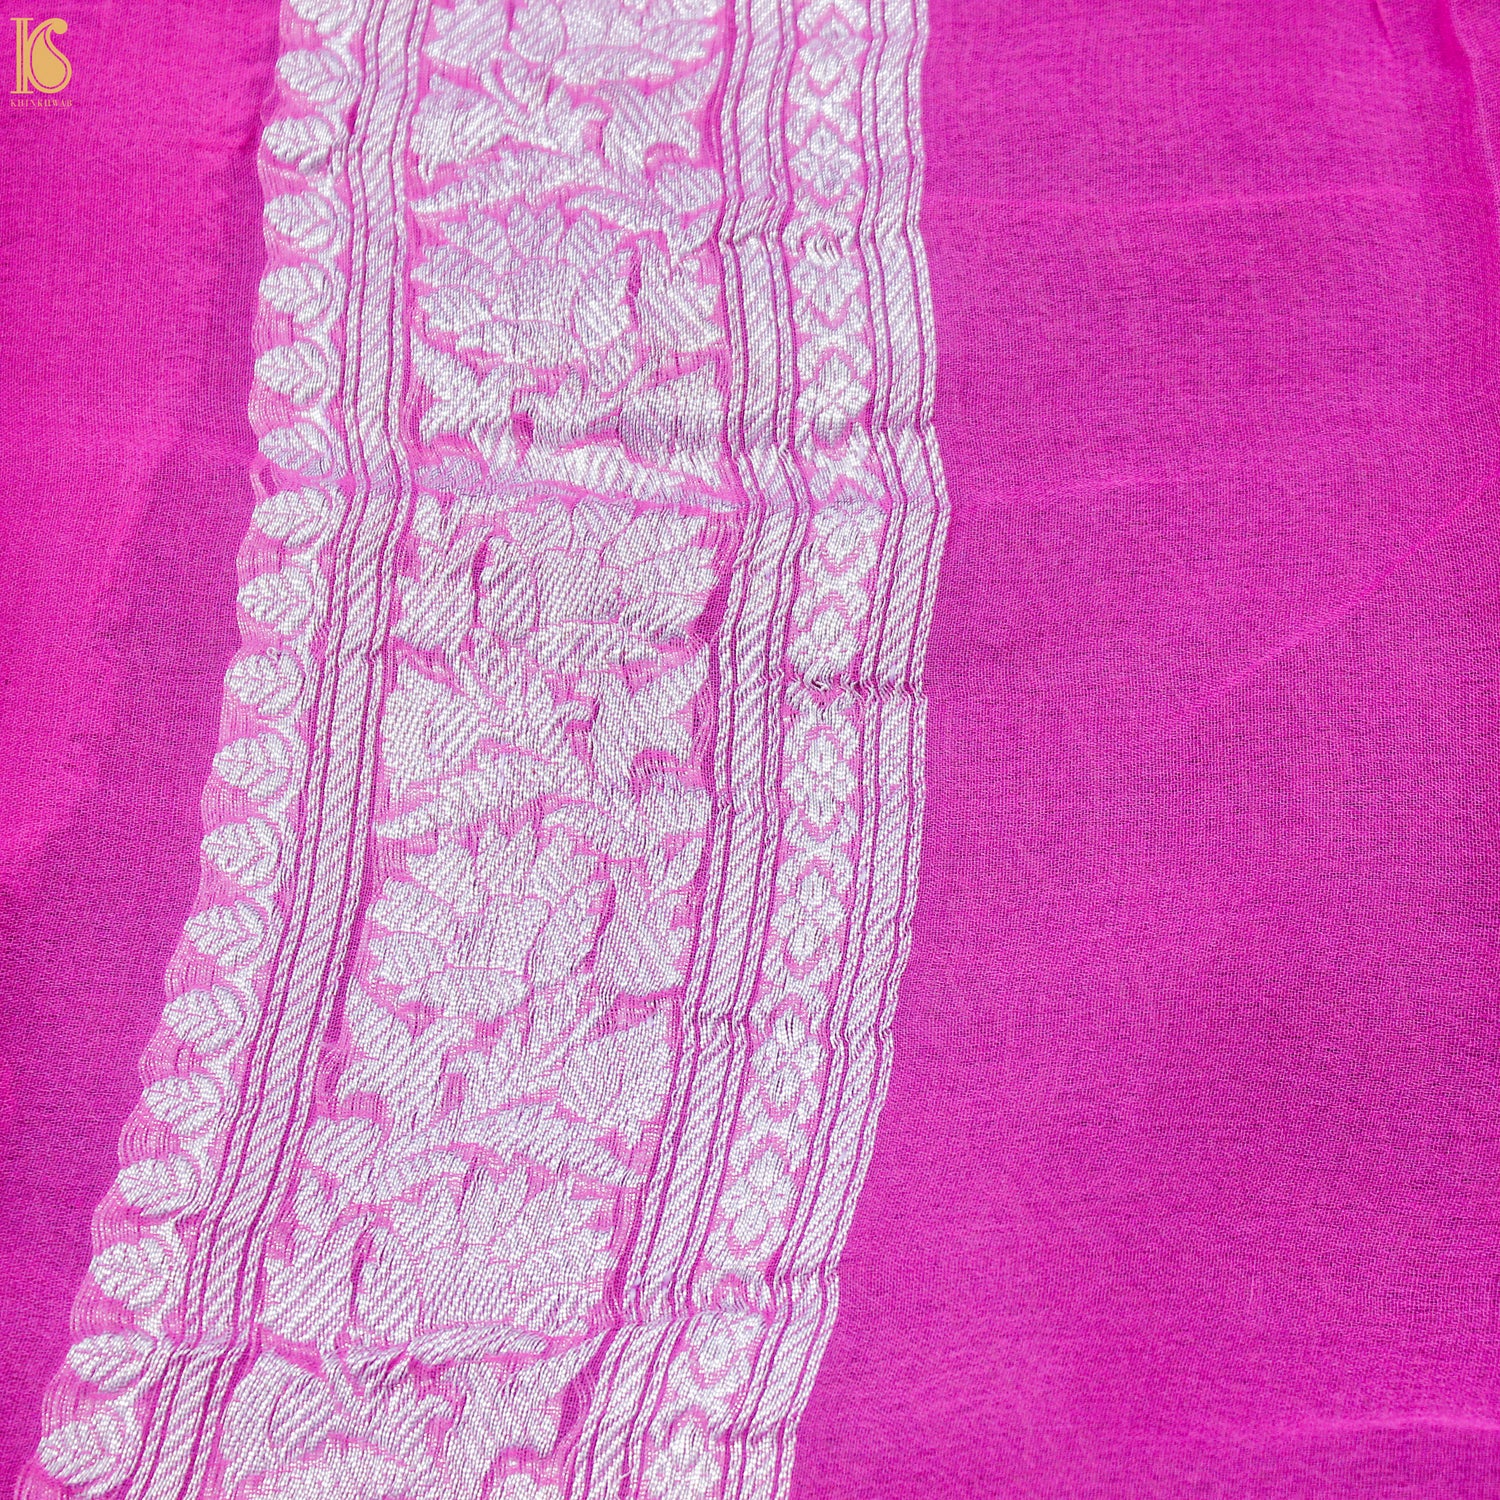 Razzle Dazzle Rose Pure Georgette Handloom Banarasi Shibori Saree - Khinkhwab